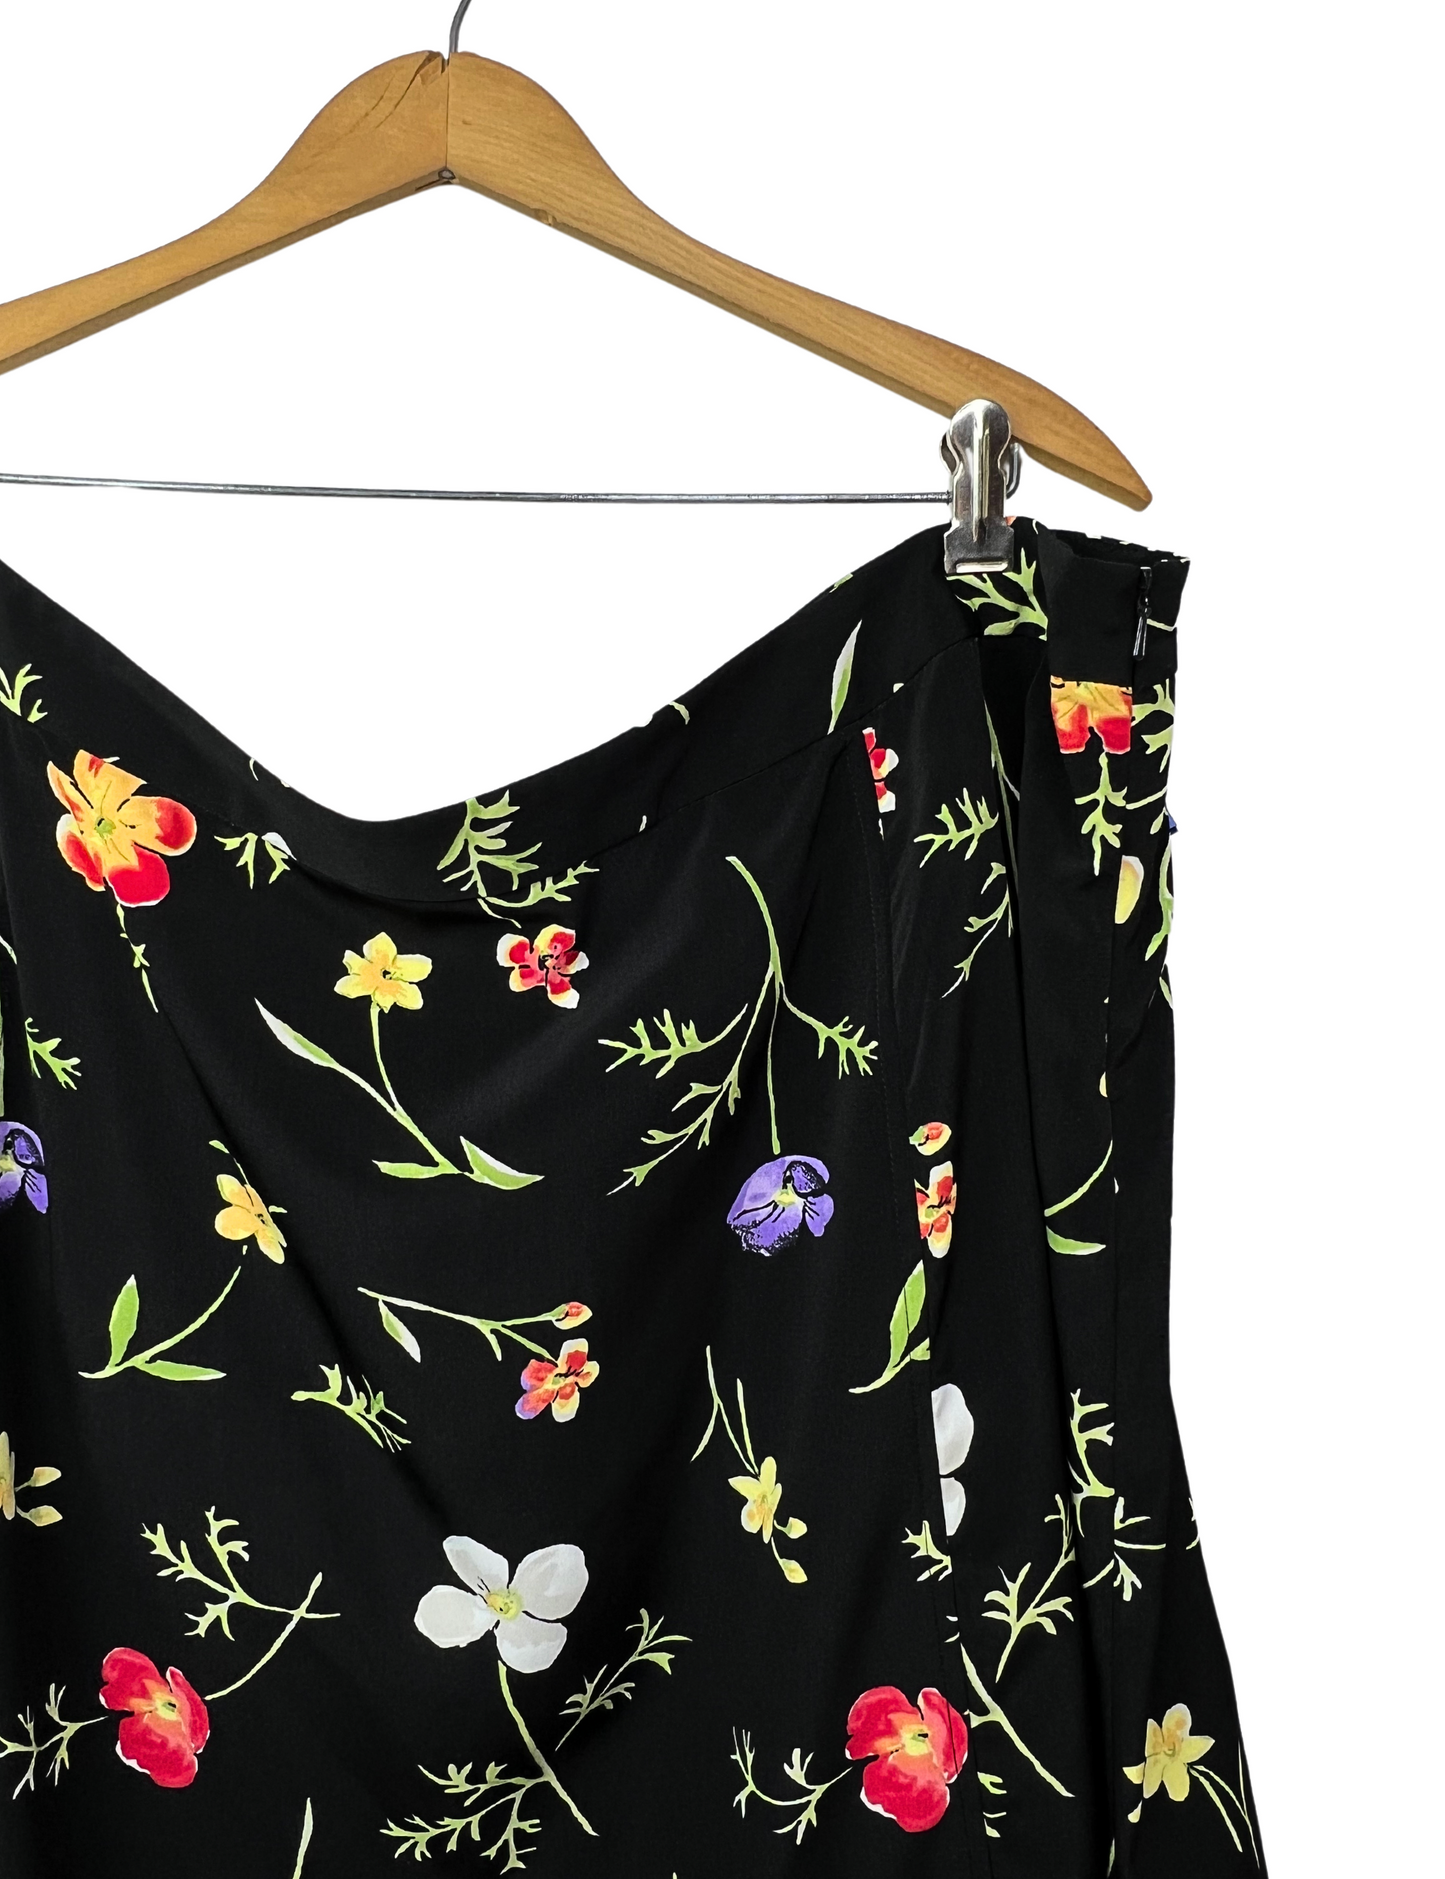 90’s Plus Size Floral Circle Skirt Size 24W